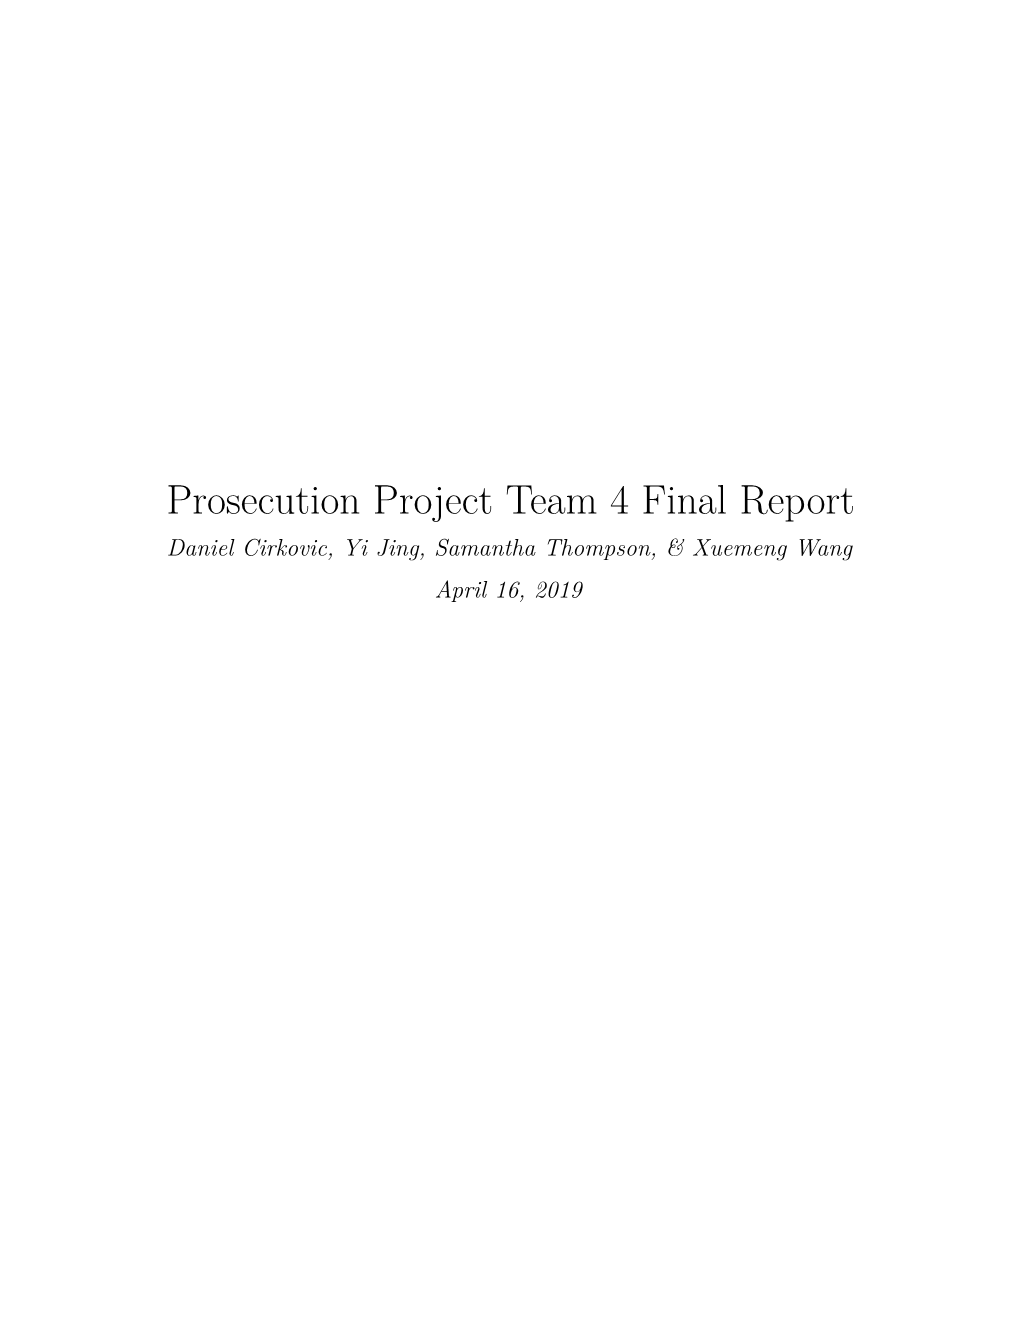 Prosecution Project Team 4 Final Report Daniel Cirkovic, Yi Jing, Samantha Thompson, & Xuemeng Wang April 16, 2019 Contents